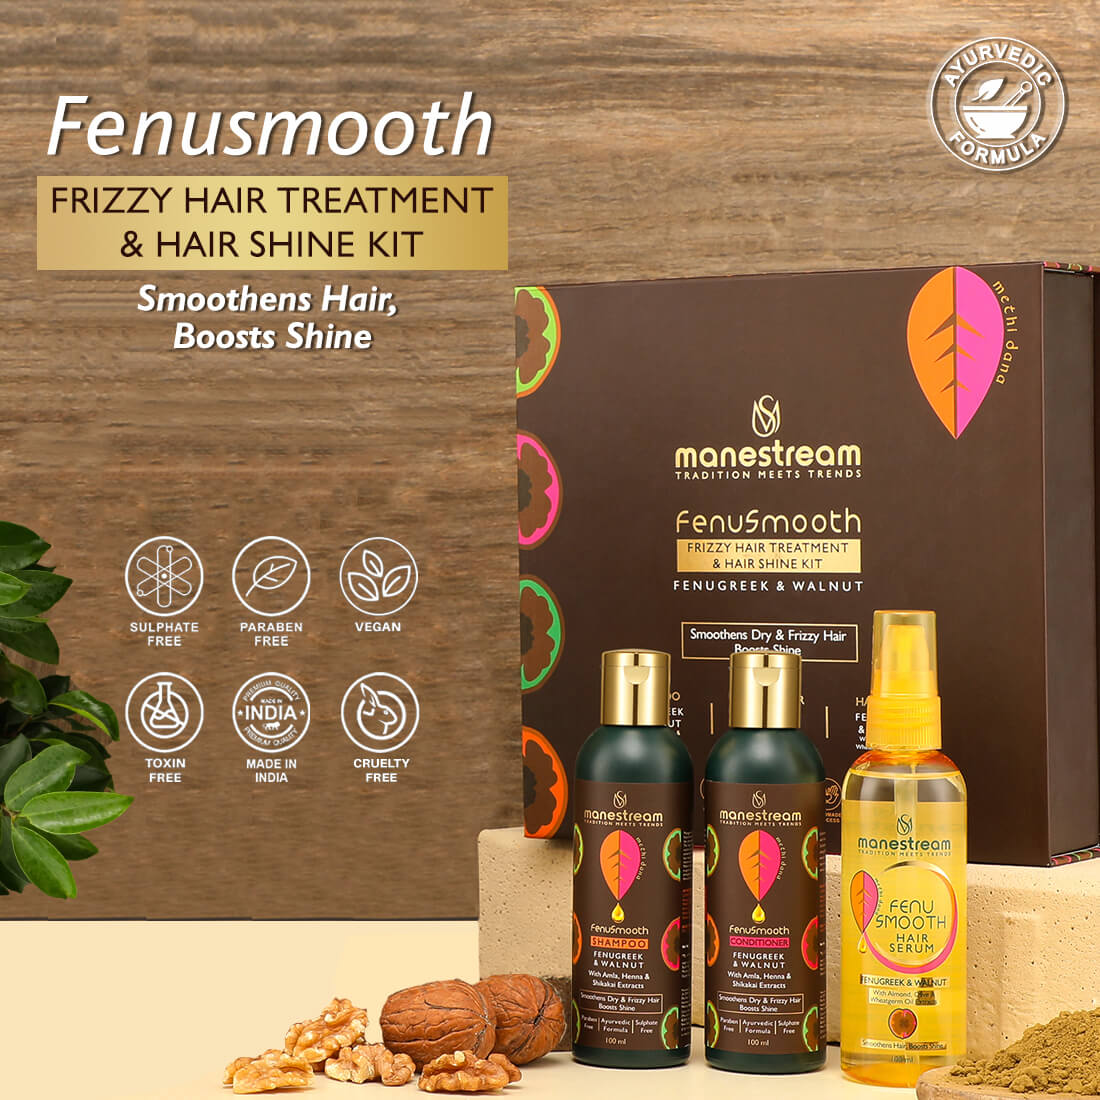 Fenusmooth Frizzy Hair Treatment & Hair Shine Kit